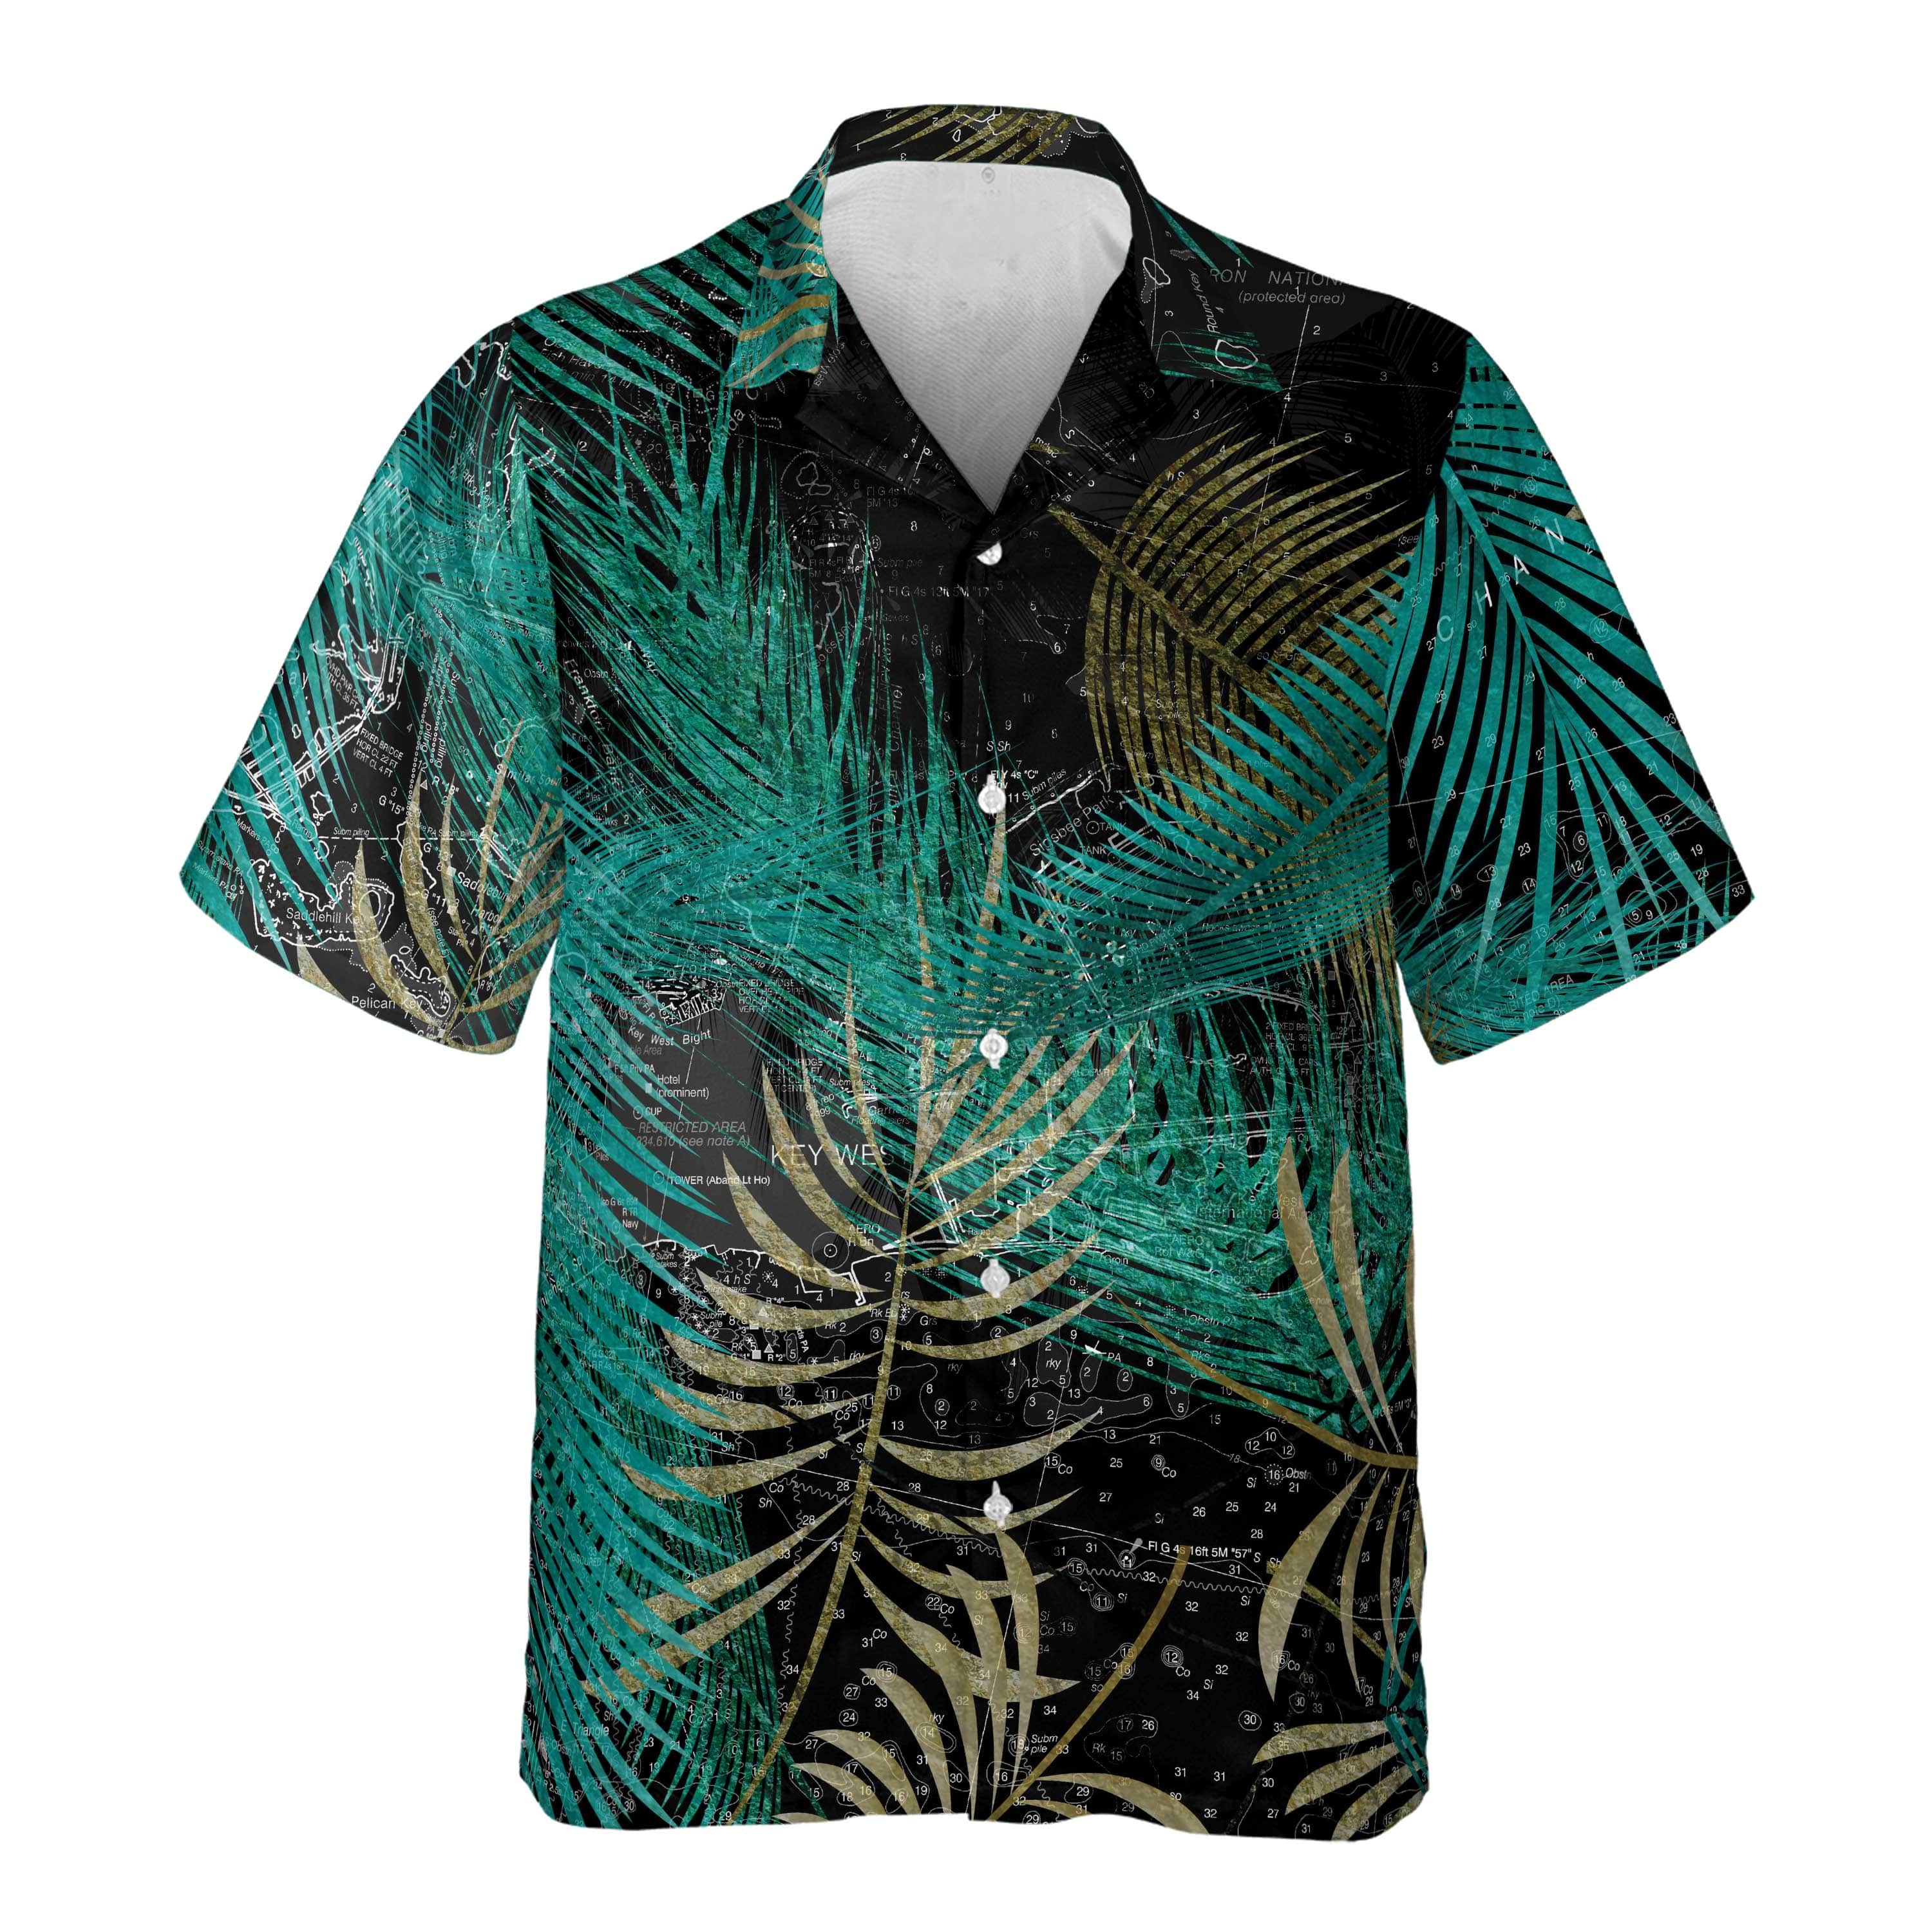 The Key West Midnight Flowers Pocket Shirt